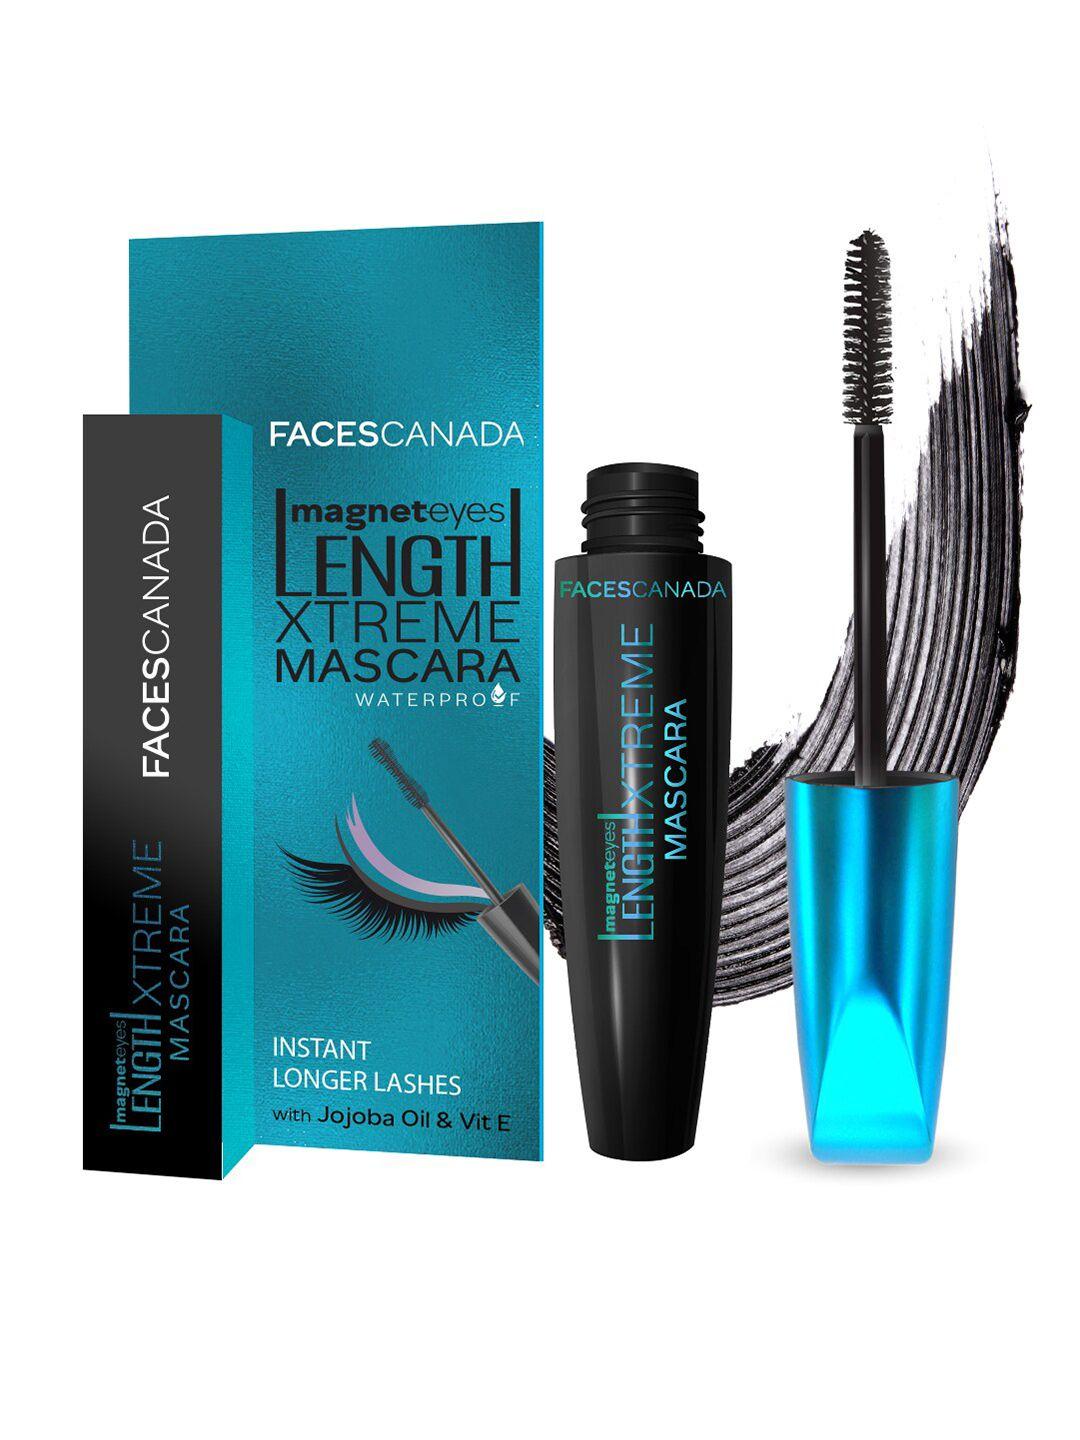 faces canada magneteyes length xtreme waterproof mascara with jojoba oil 8 g - black